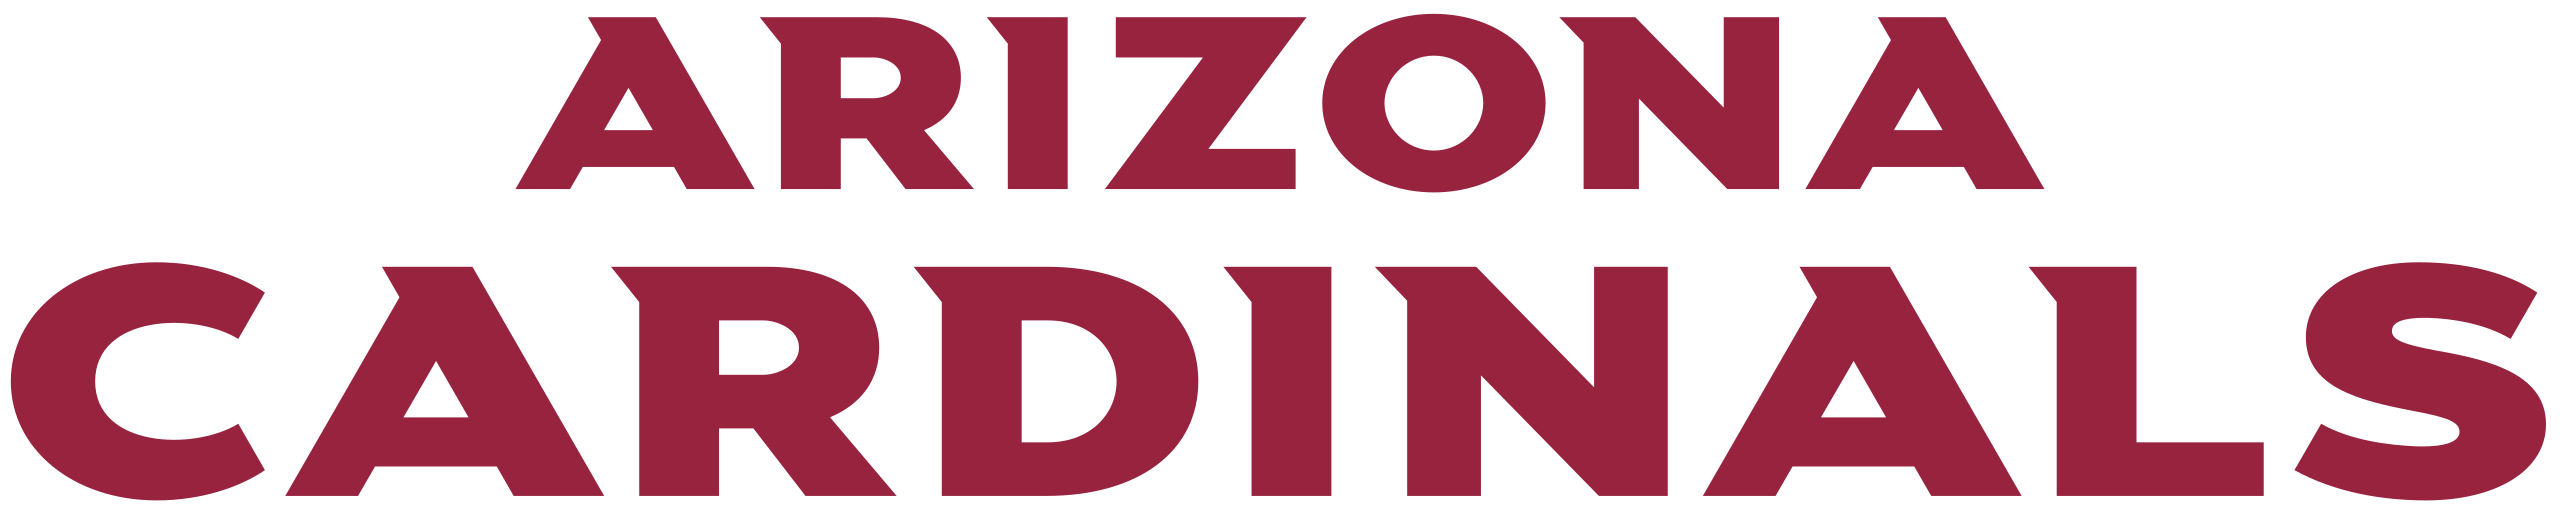 File:Arizona Cardinals wordmark.svg - Wikipedia